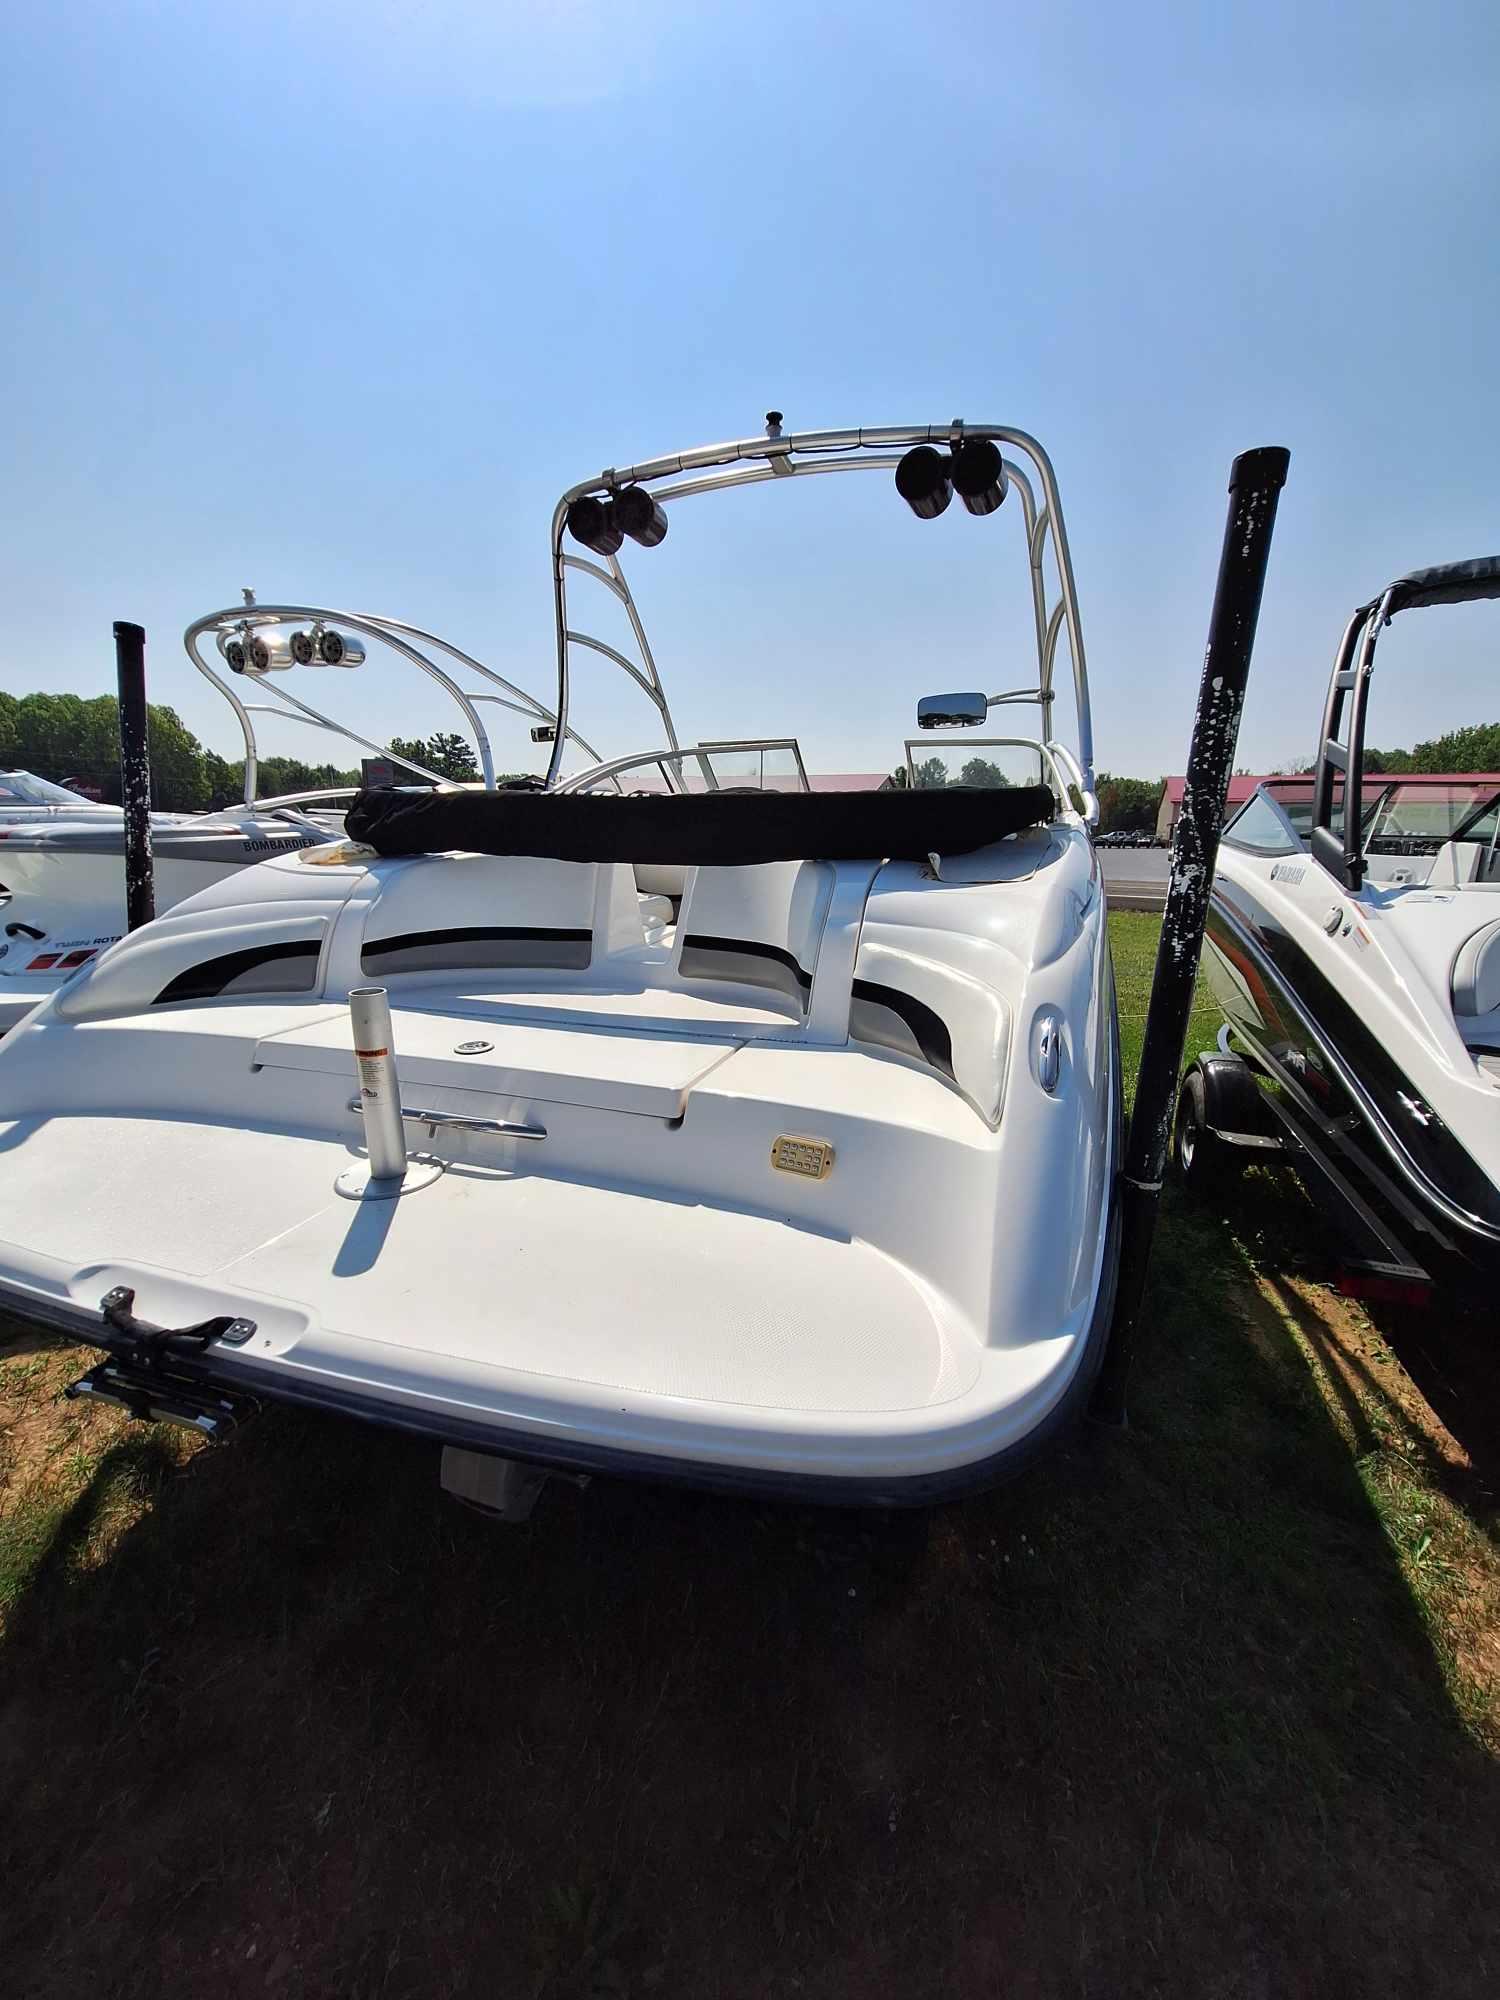 Yamaha Boats Ar230 for sale - boats.com